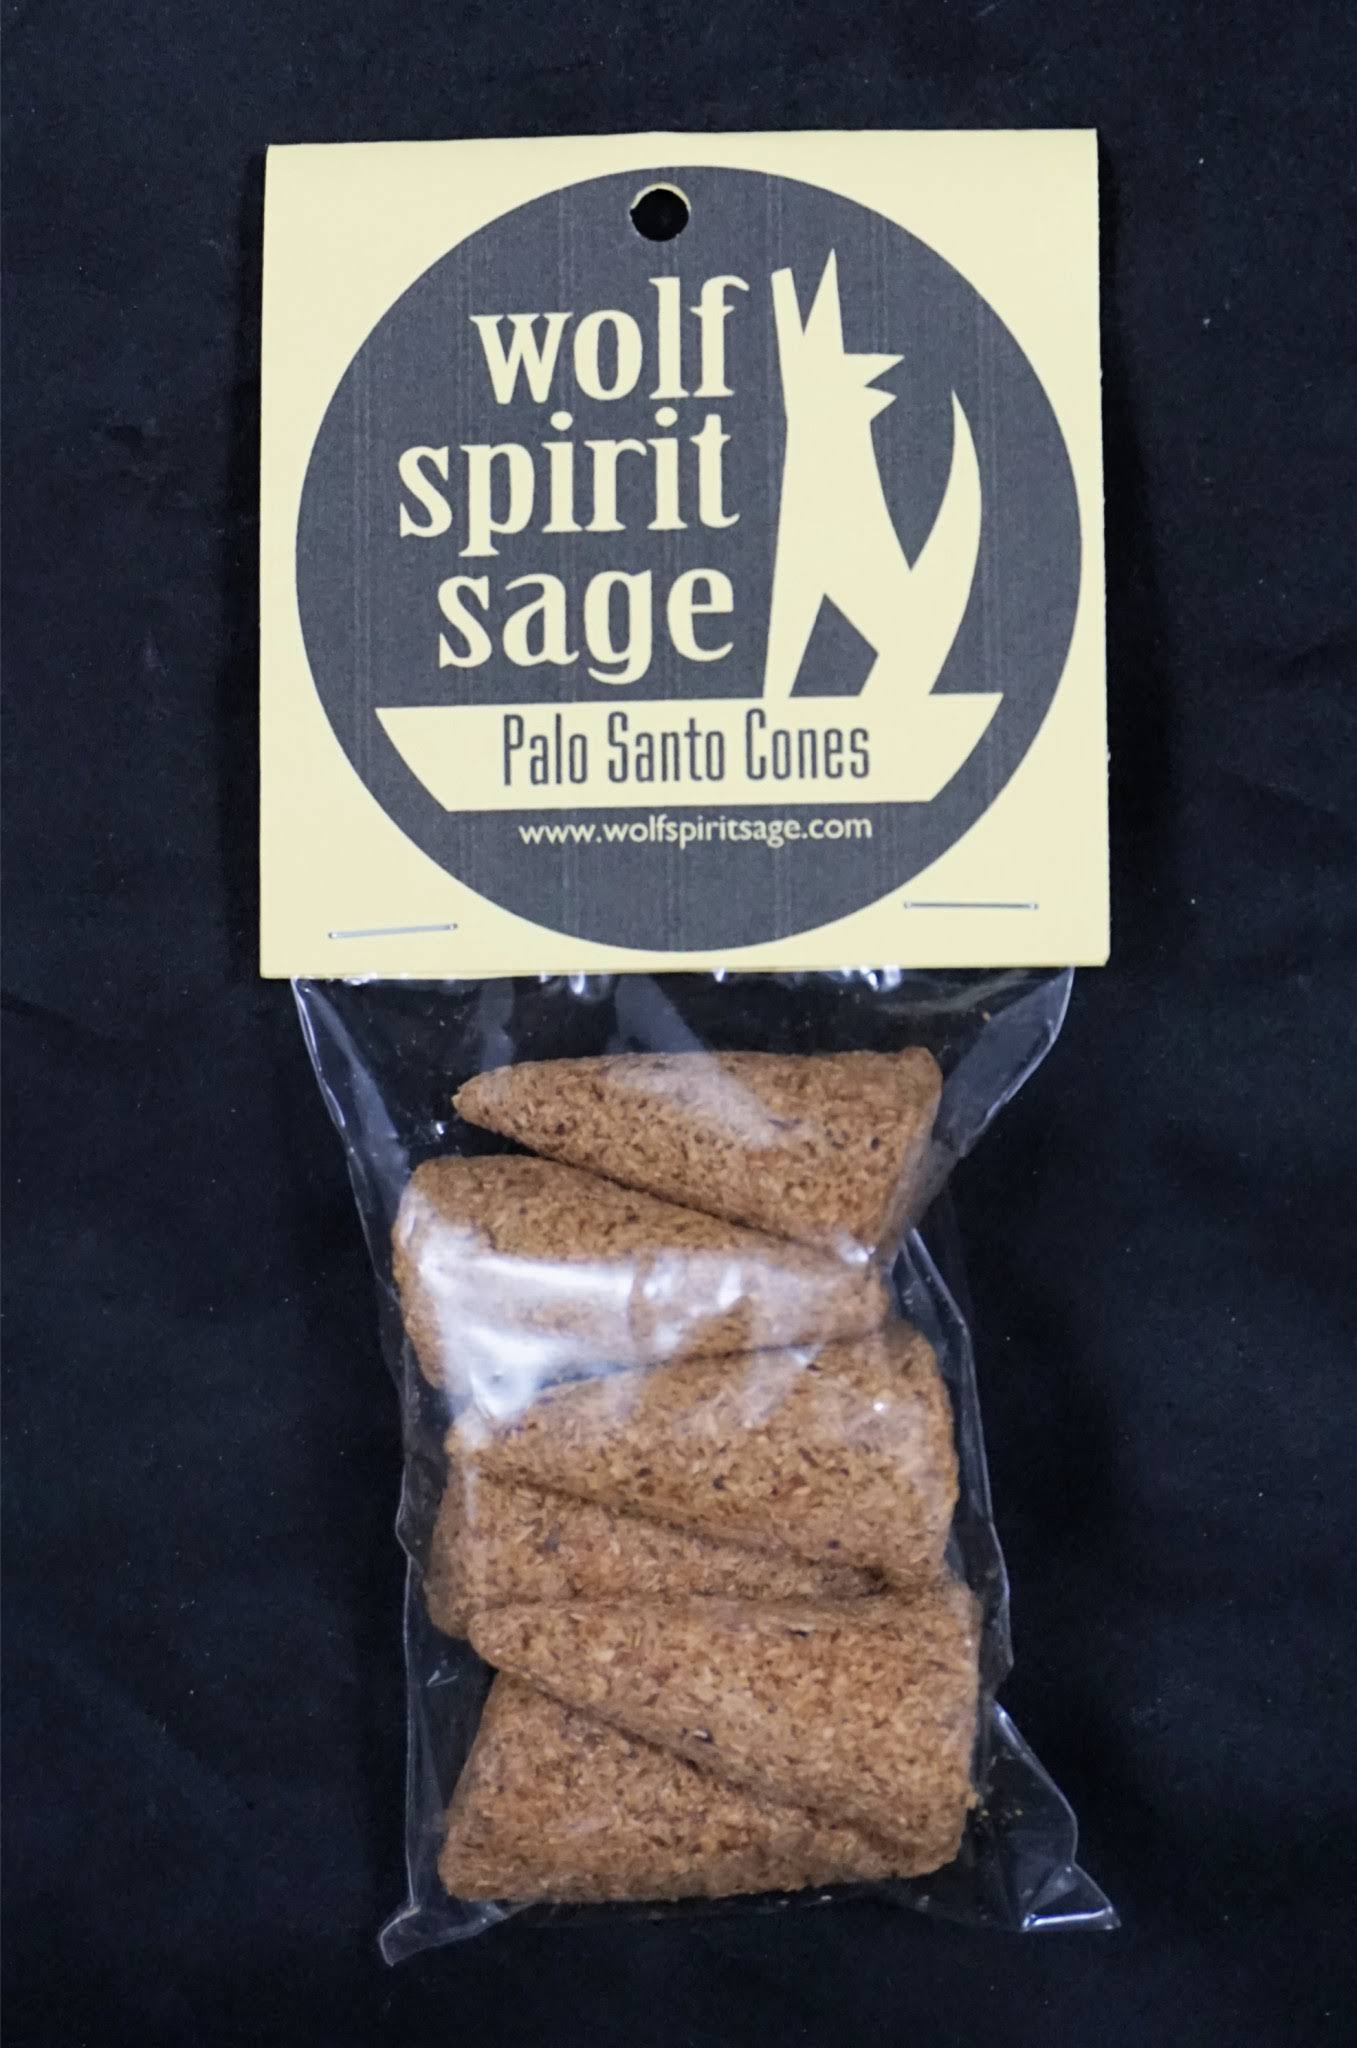 Wolf Spirit Sage Palo Santo Cones